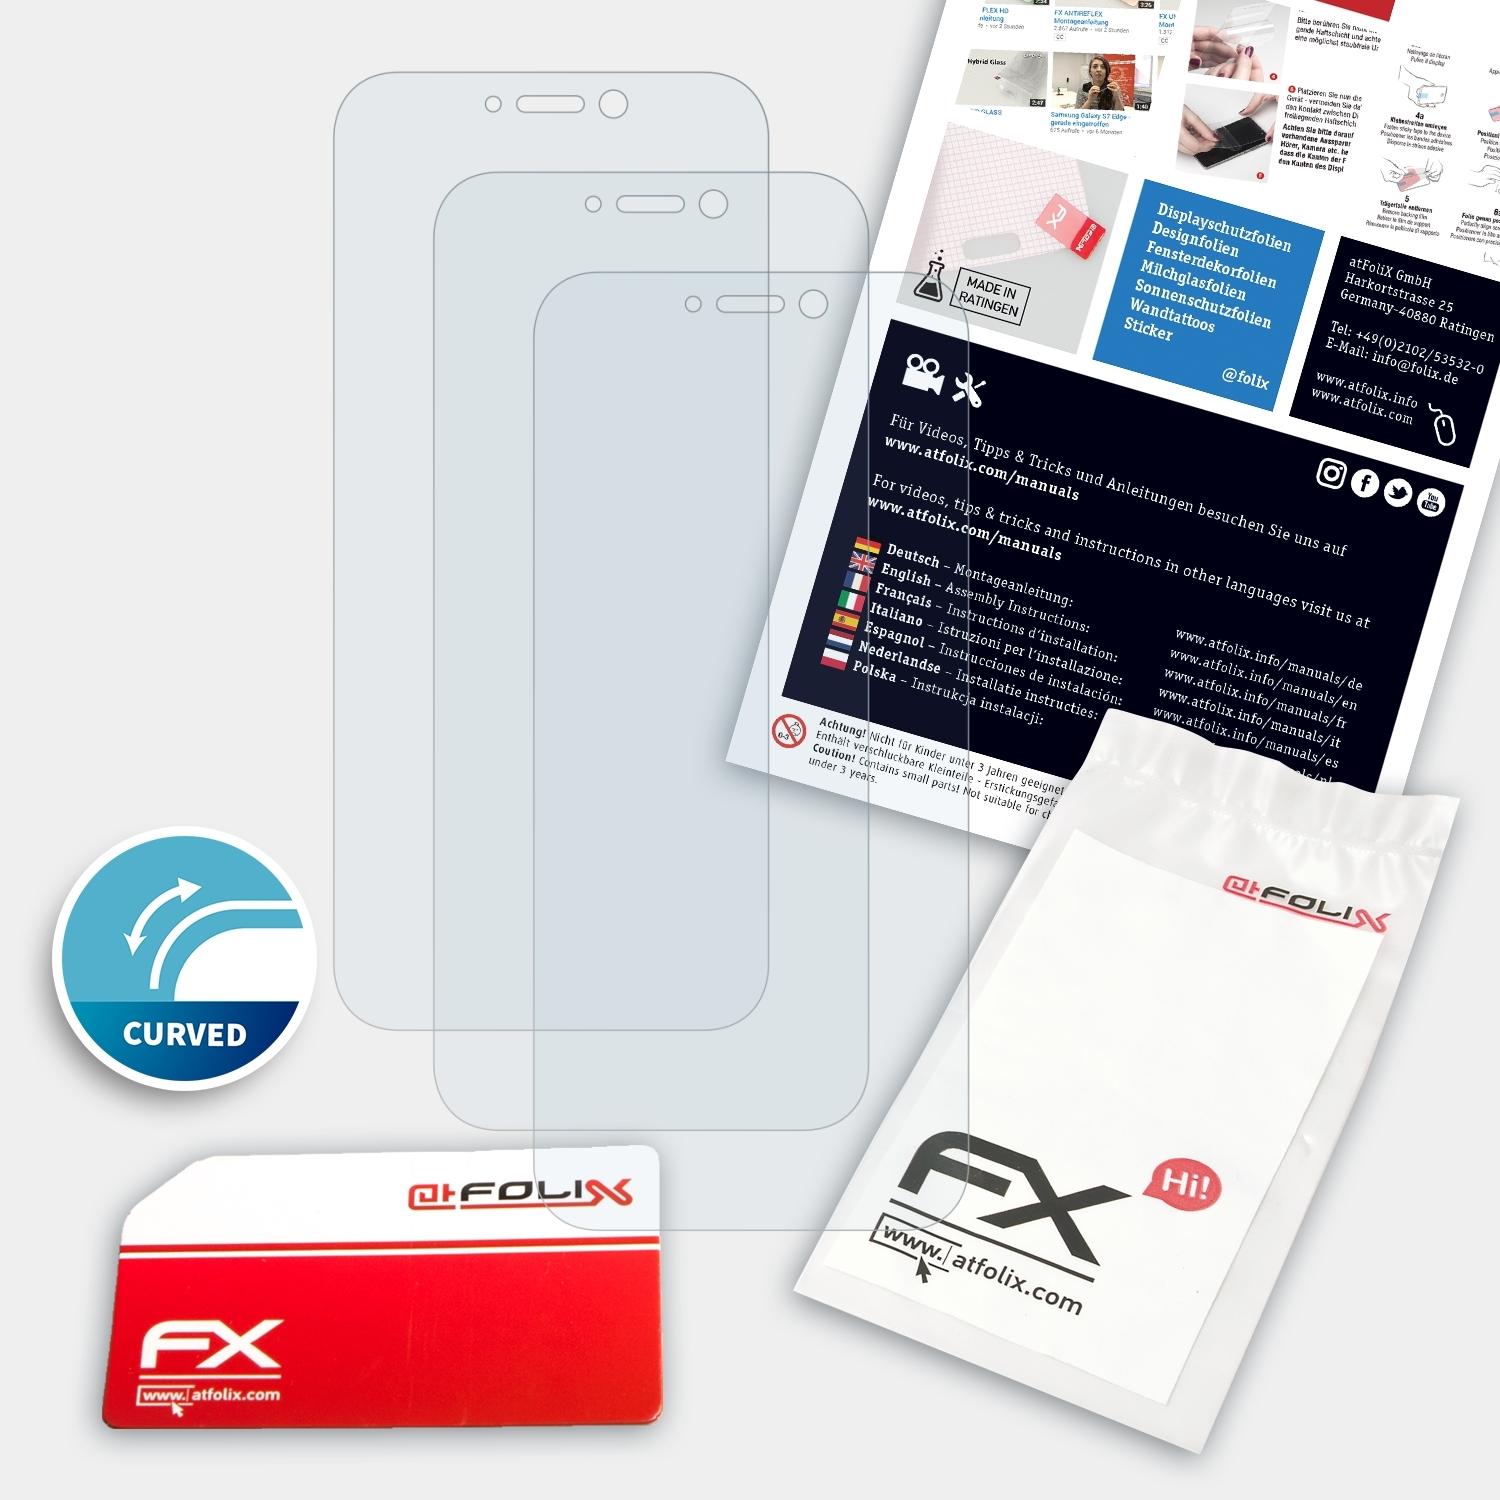 ATFOLIX 3x FX-ActiFleX Displayschutz(für Oukitel Pro) WP5